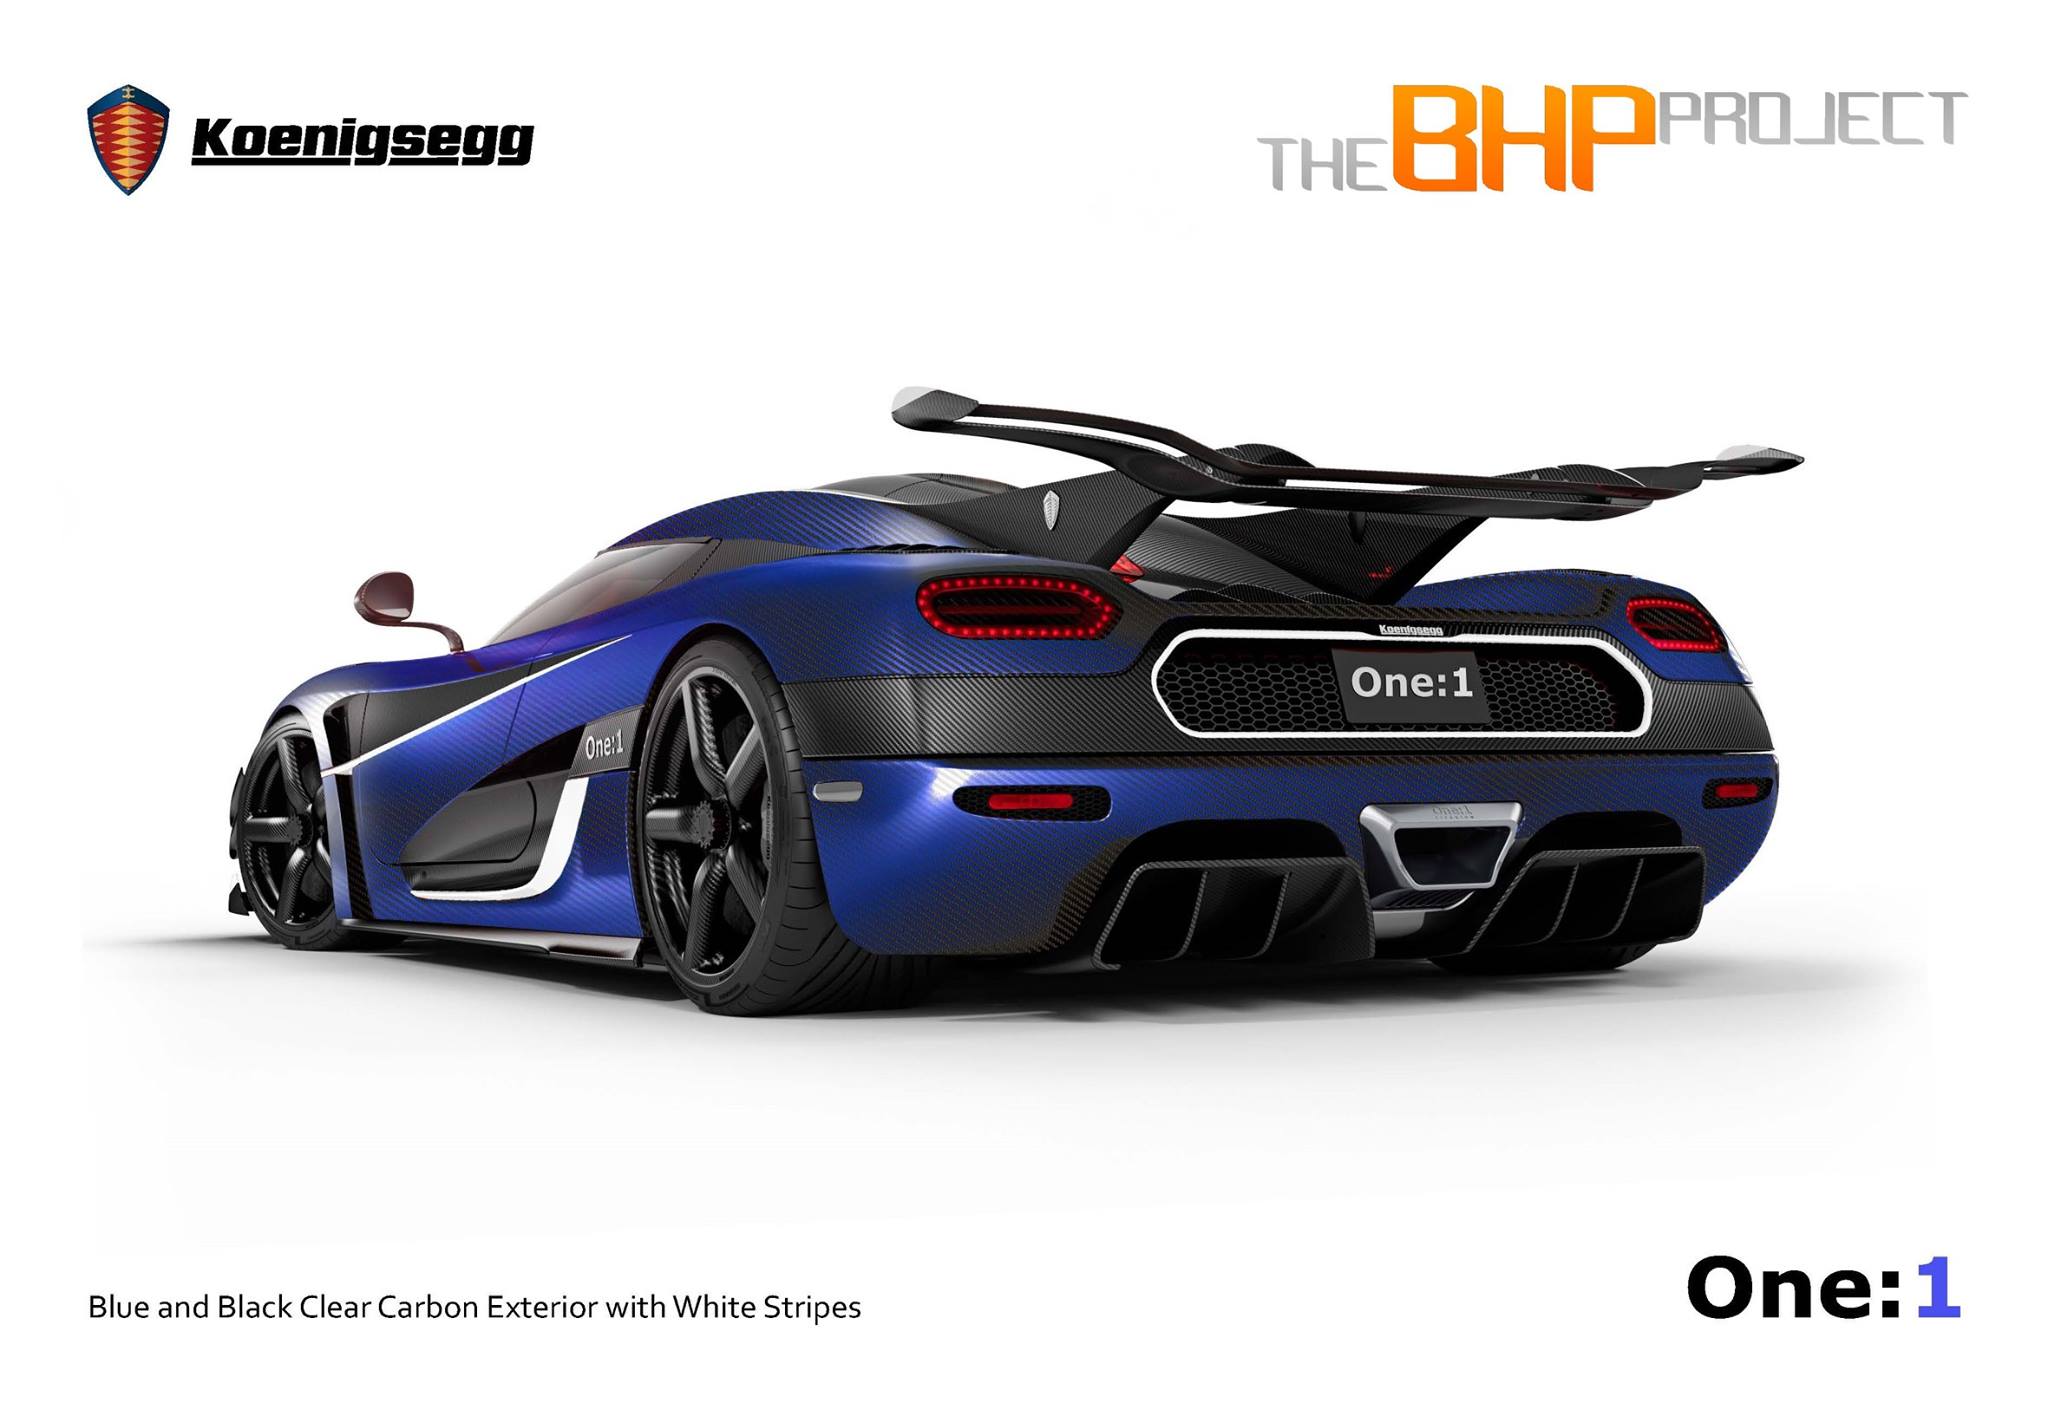 Bhp Project Releases Renderings Of Koenigsegg Automotive